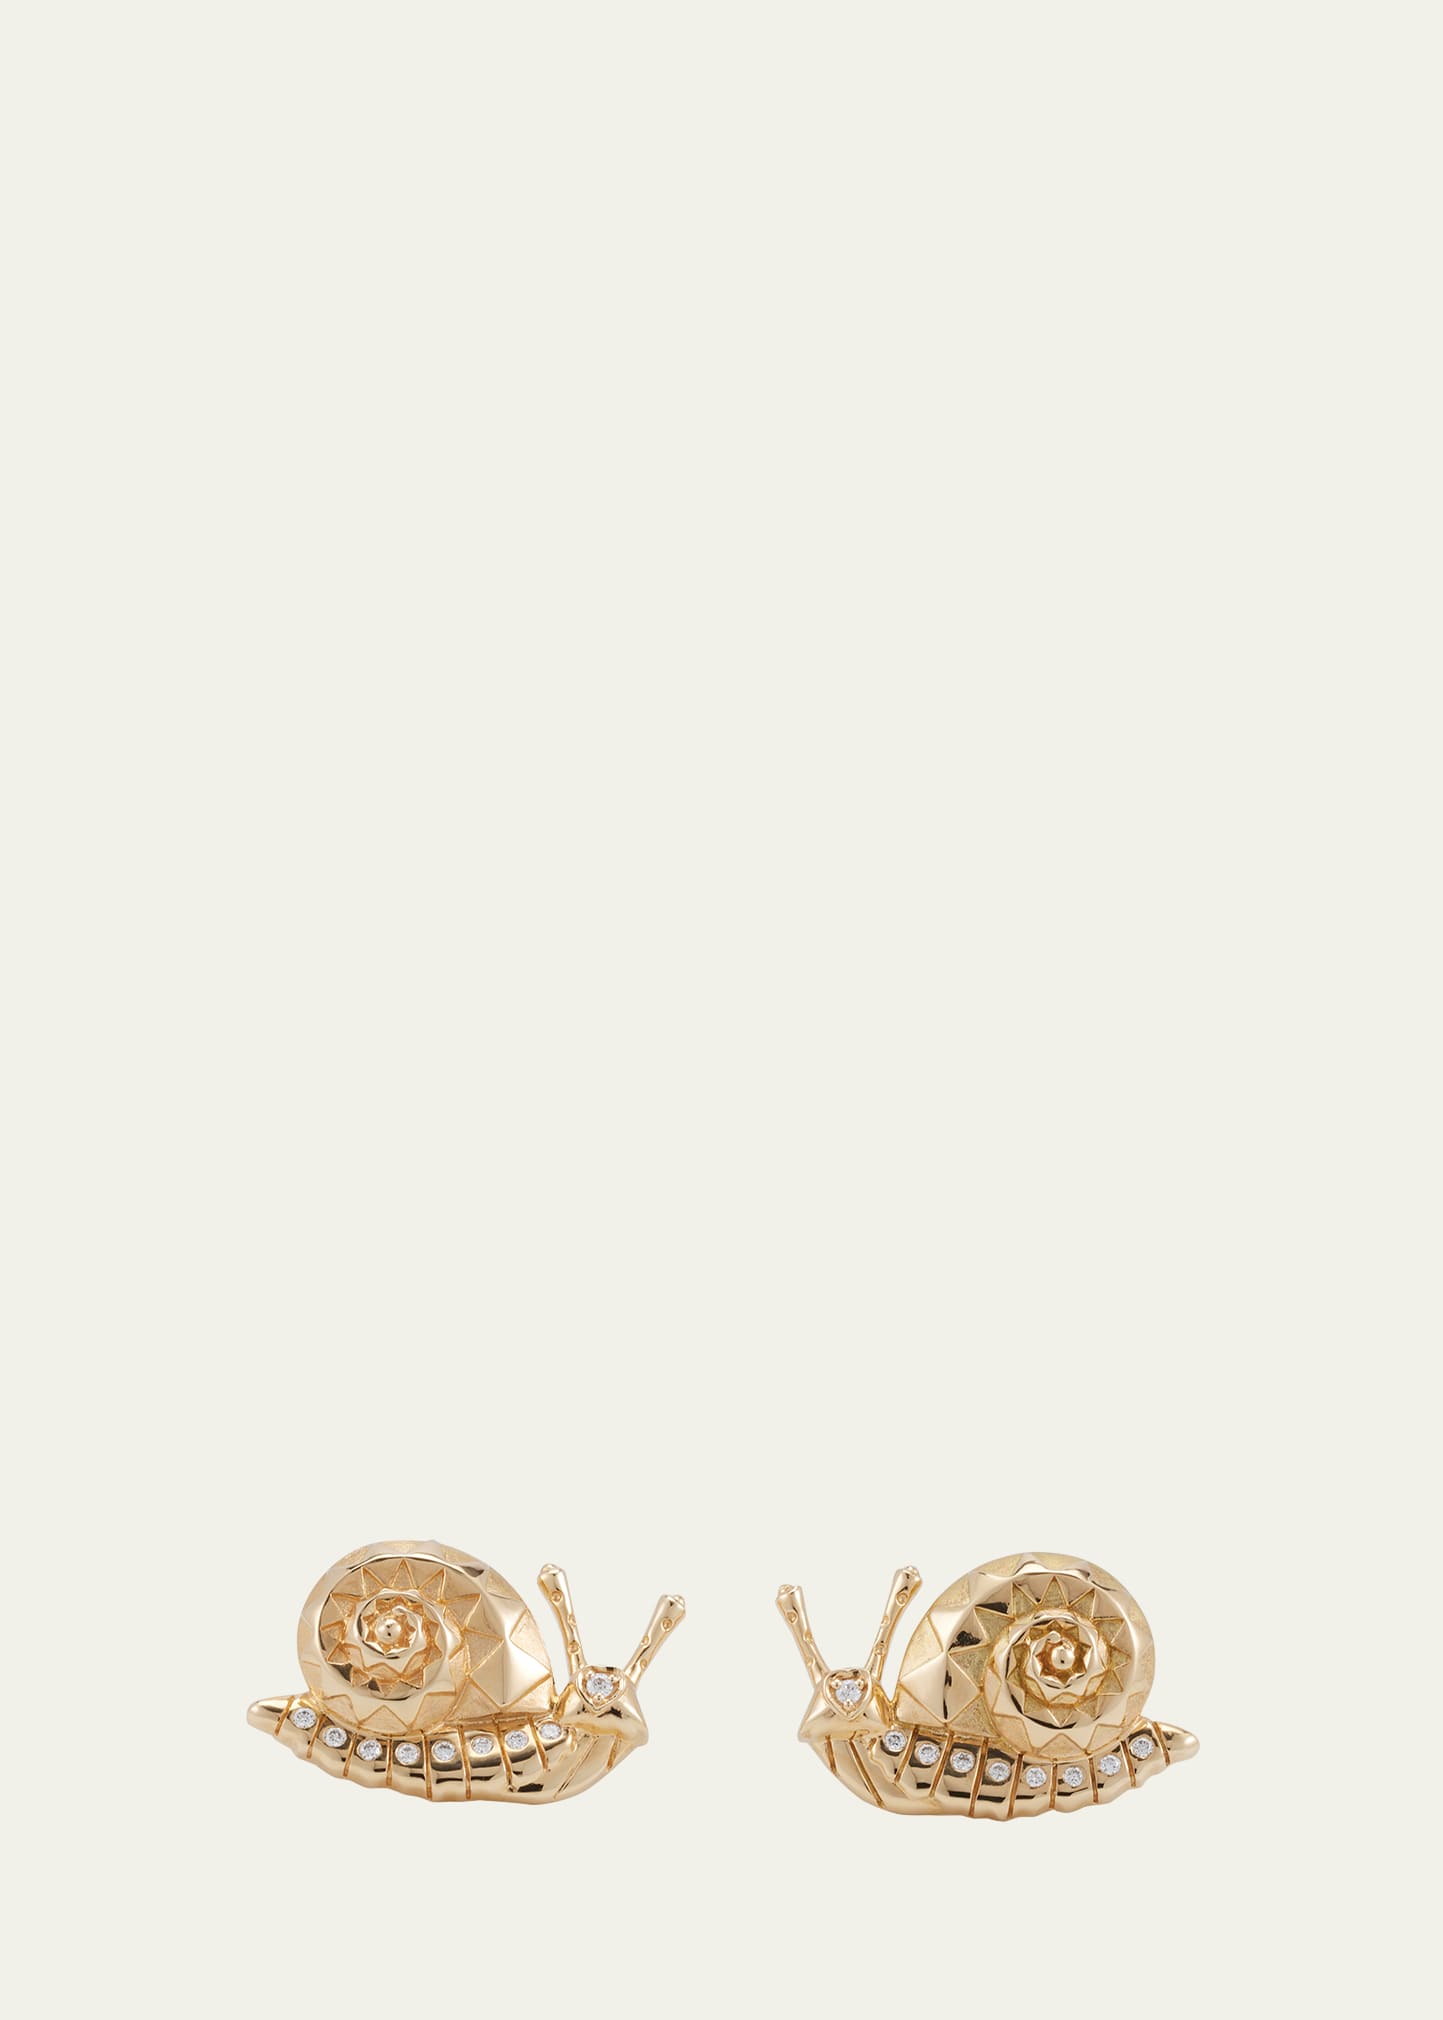 Snail Stud Earrings with Diamonds